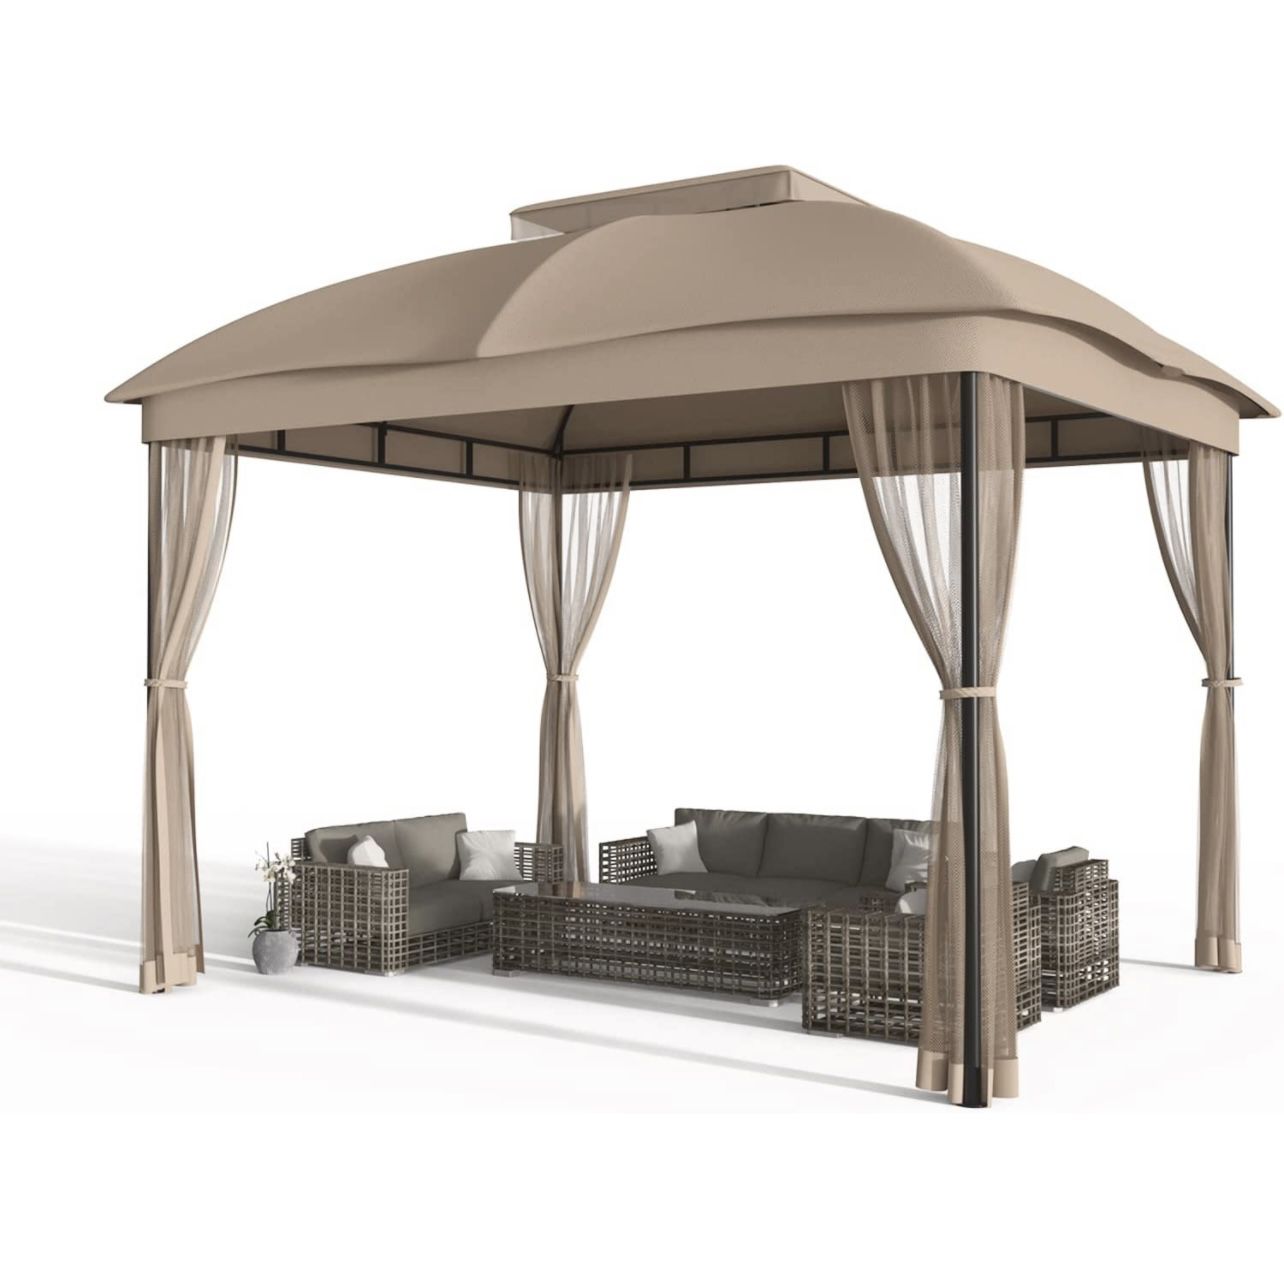 Canopy Tent Gazebo 10' X 13' Grill Gazebo for Patios BBQ Outdoor Patio Large Garden Top Gazebo with Sidewall Party Tent